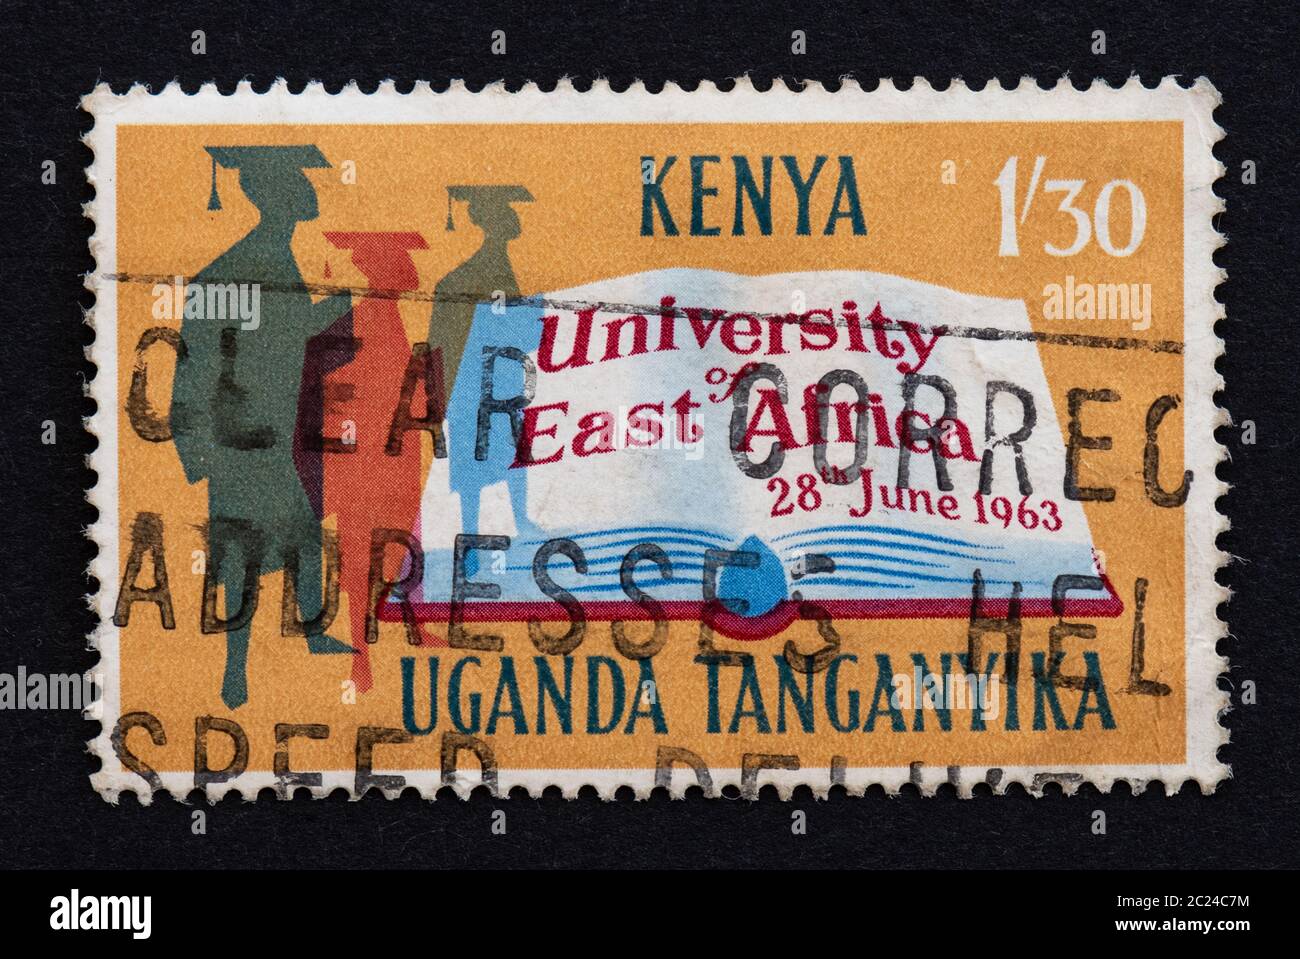 Founding of the University of East Africa 28 June 1963 stamp, Kenya, Uganda, Tanganyika Stock Photo